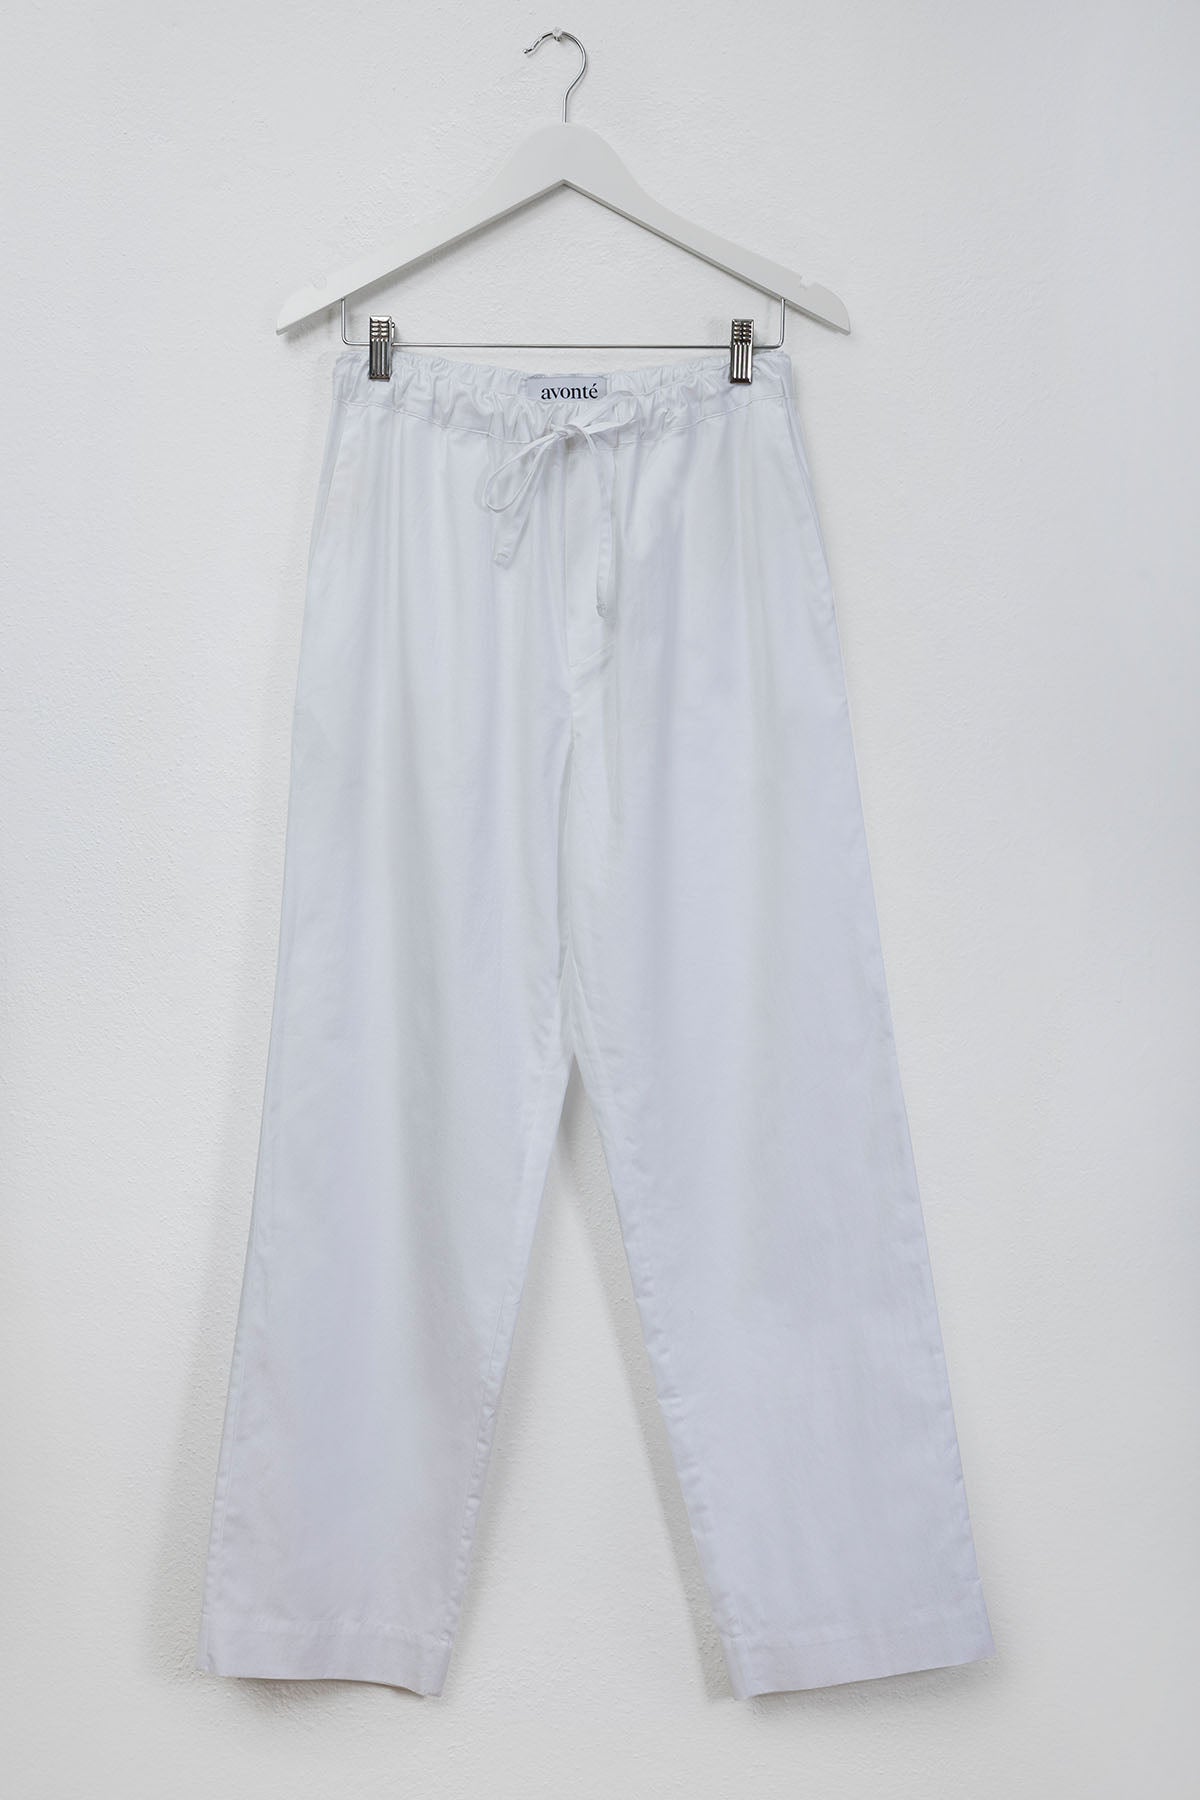 long pyjama pants in volor worthy white_avonte